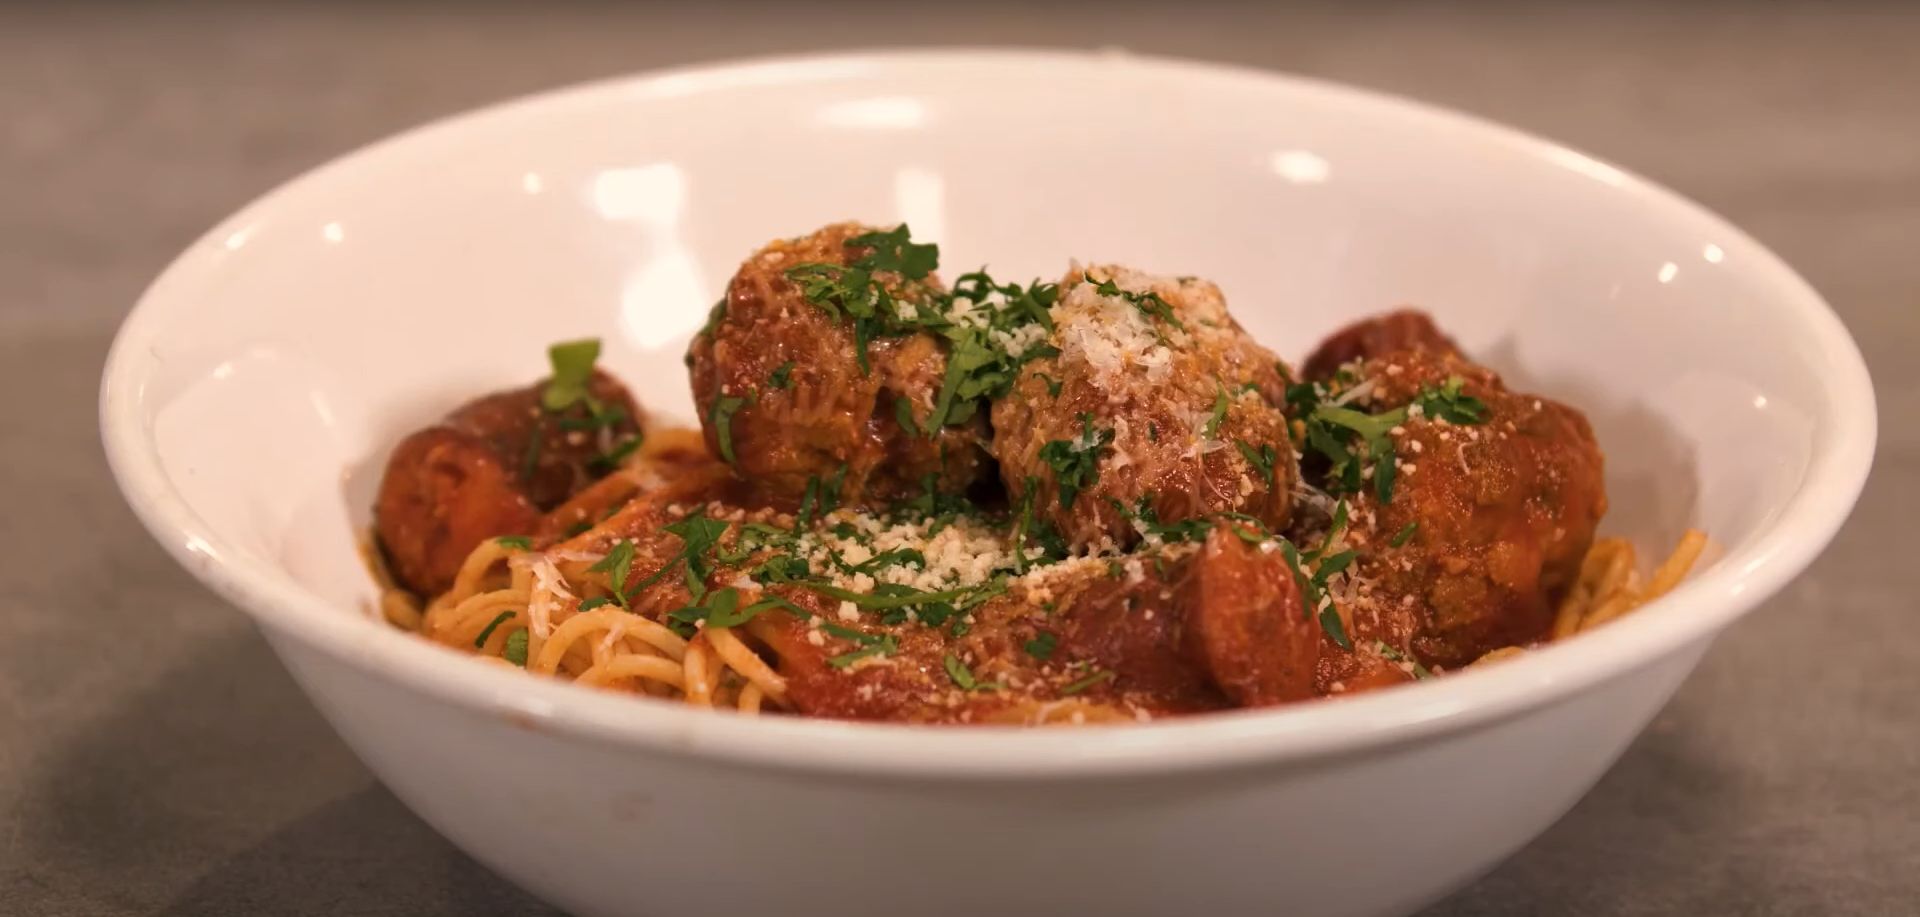 Spaghetti-Rezept aus dem Film „Der Pate“